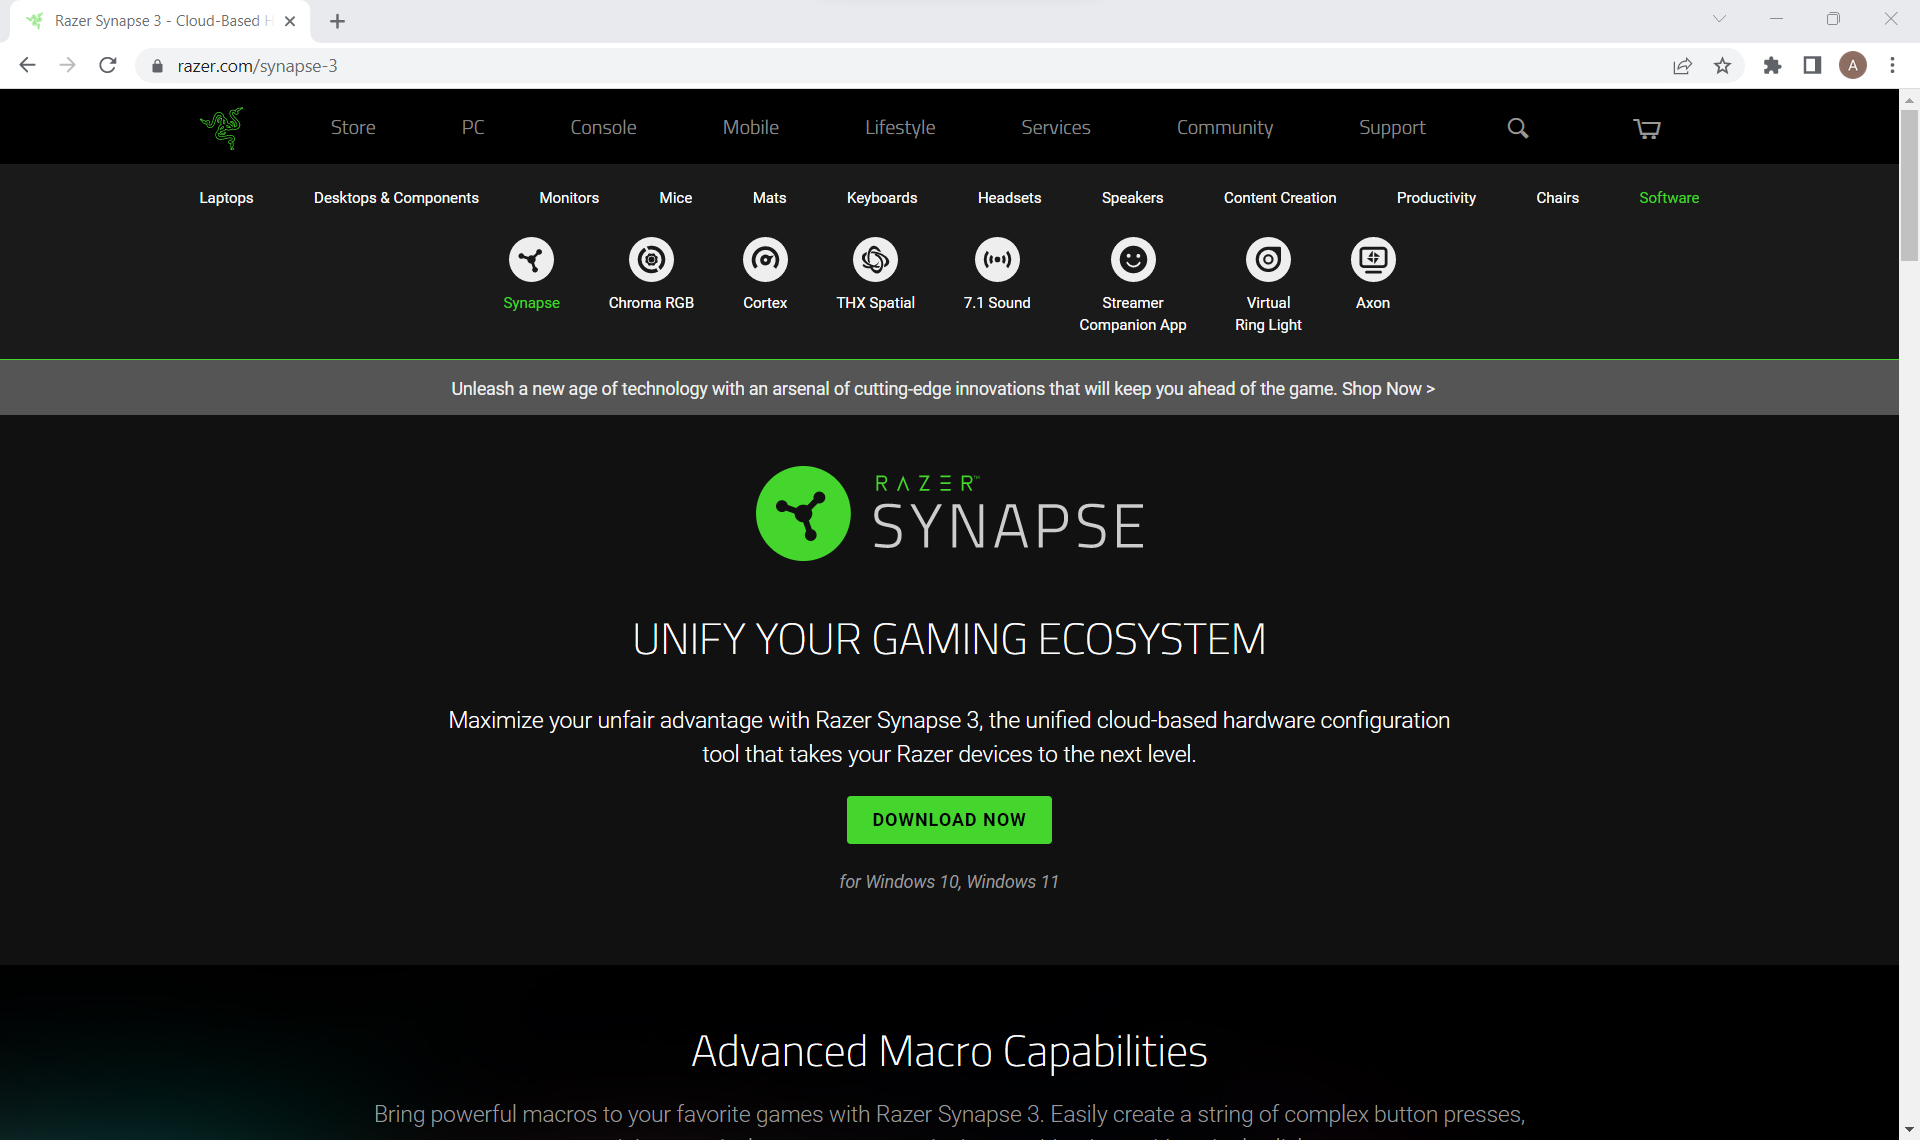 Click Download Now - Razer Synapse 3